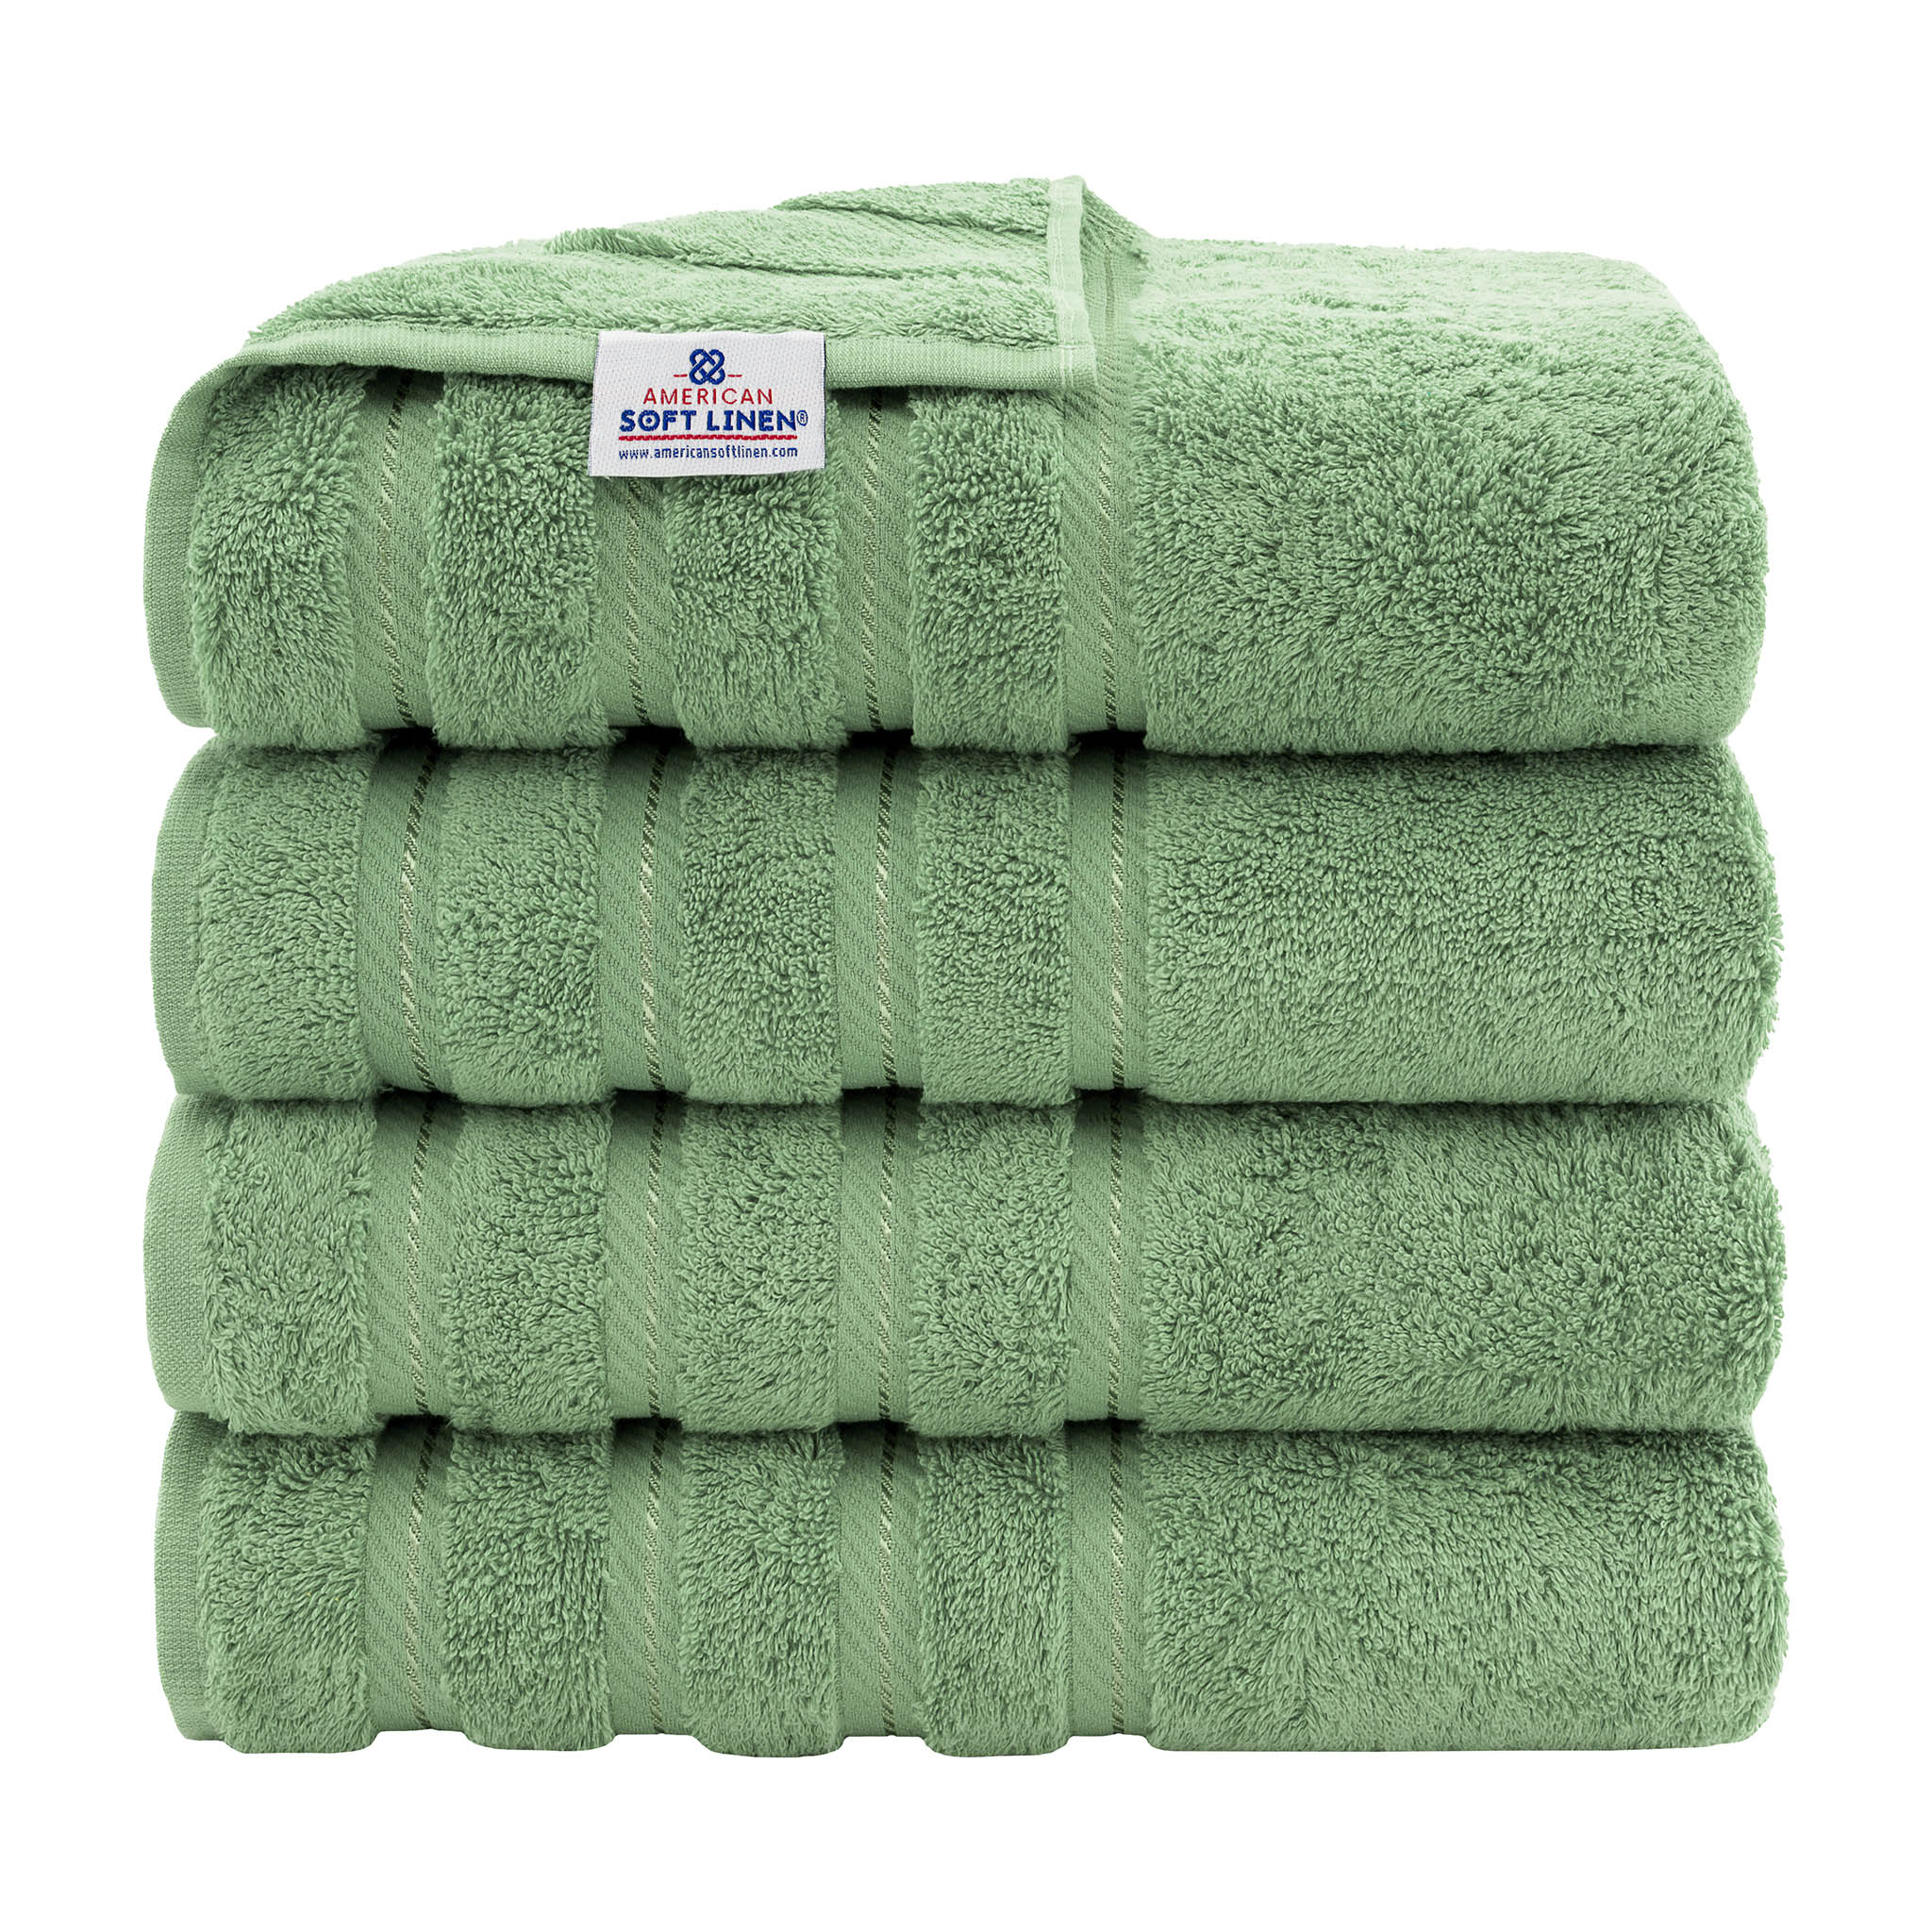 American Soft Linen 100% Turkish Cotton 4 Pack Bath Towel Set Wholesale sage-green-1